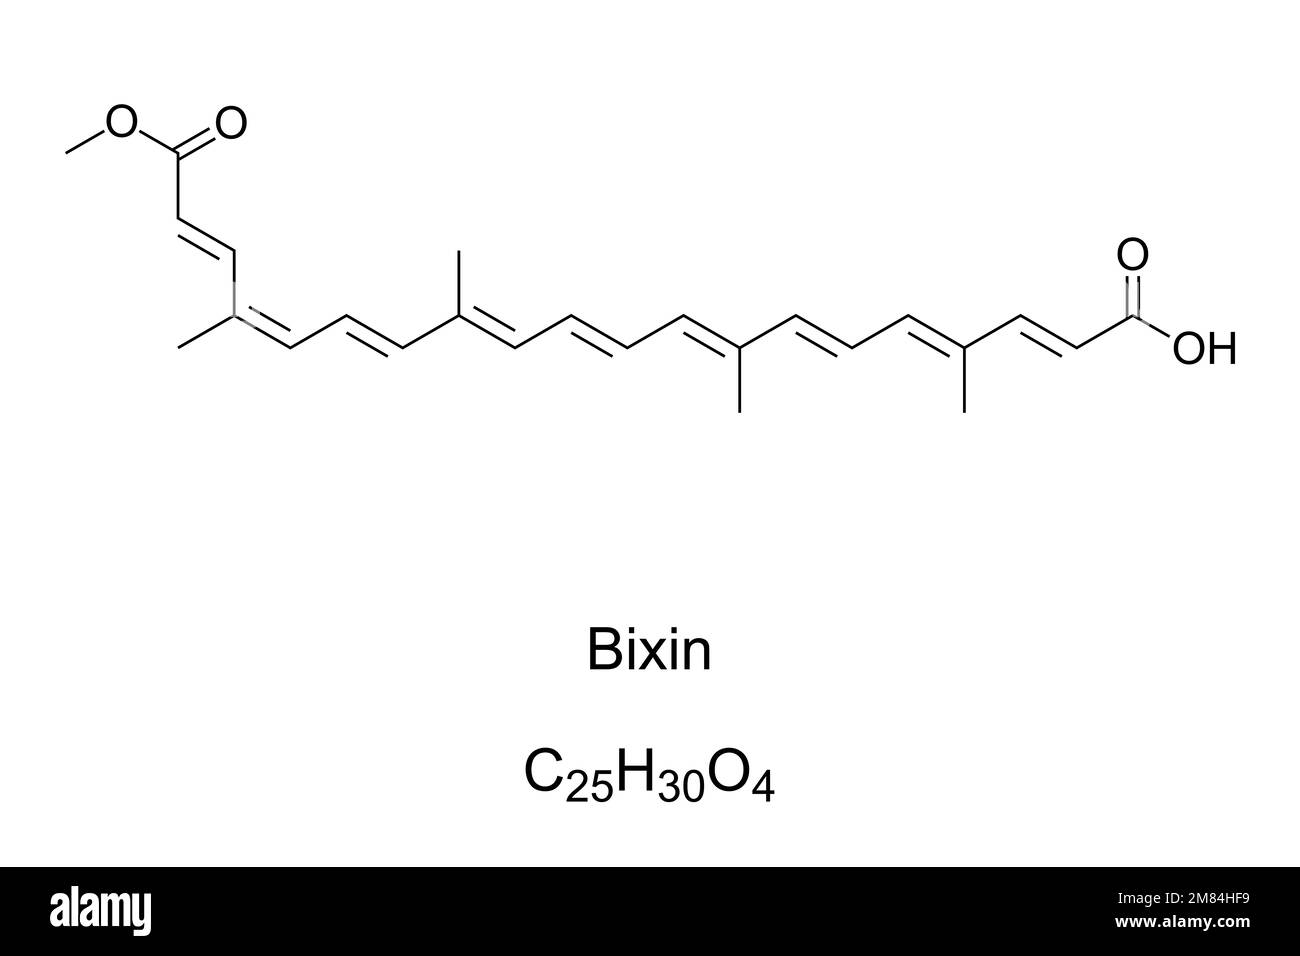 Bixin, cis- or alpha-Bixin, chemical formula. Carotenoid extracted from seeds of the achiote tree, Bixa orellana, to form annatto, a natural pigment. Stock Photo